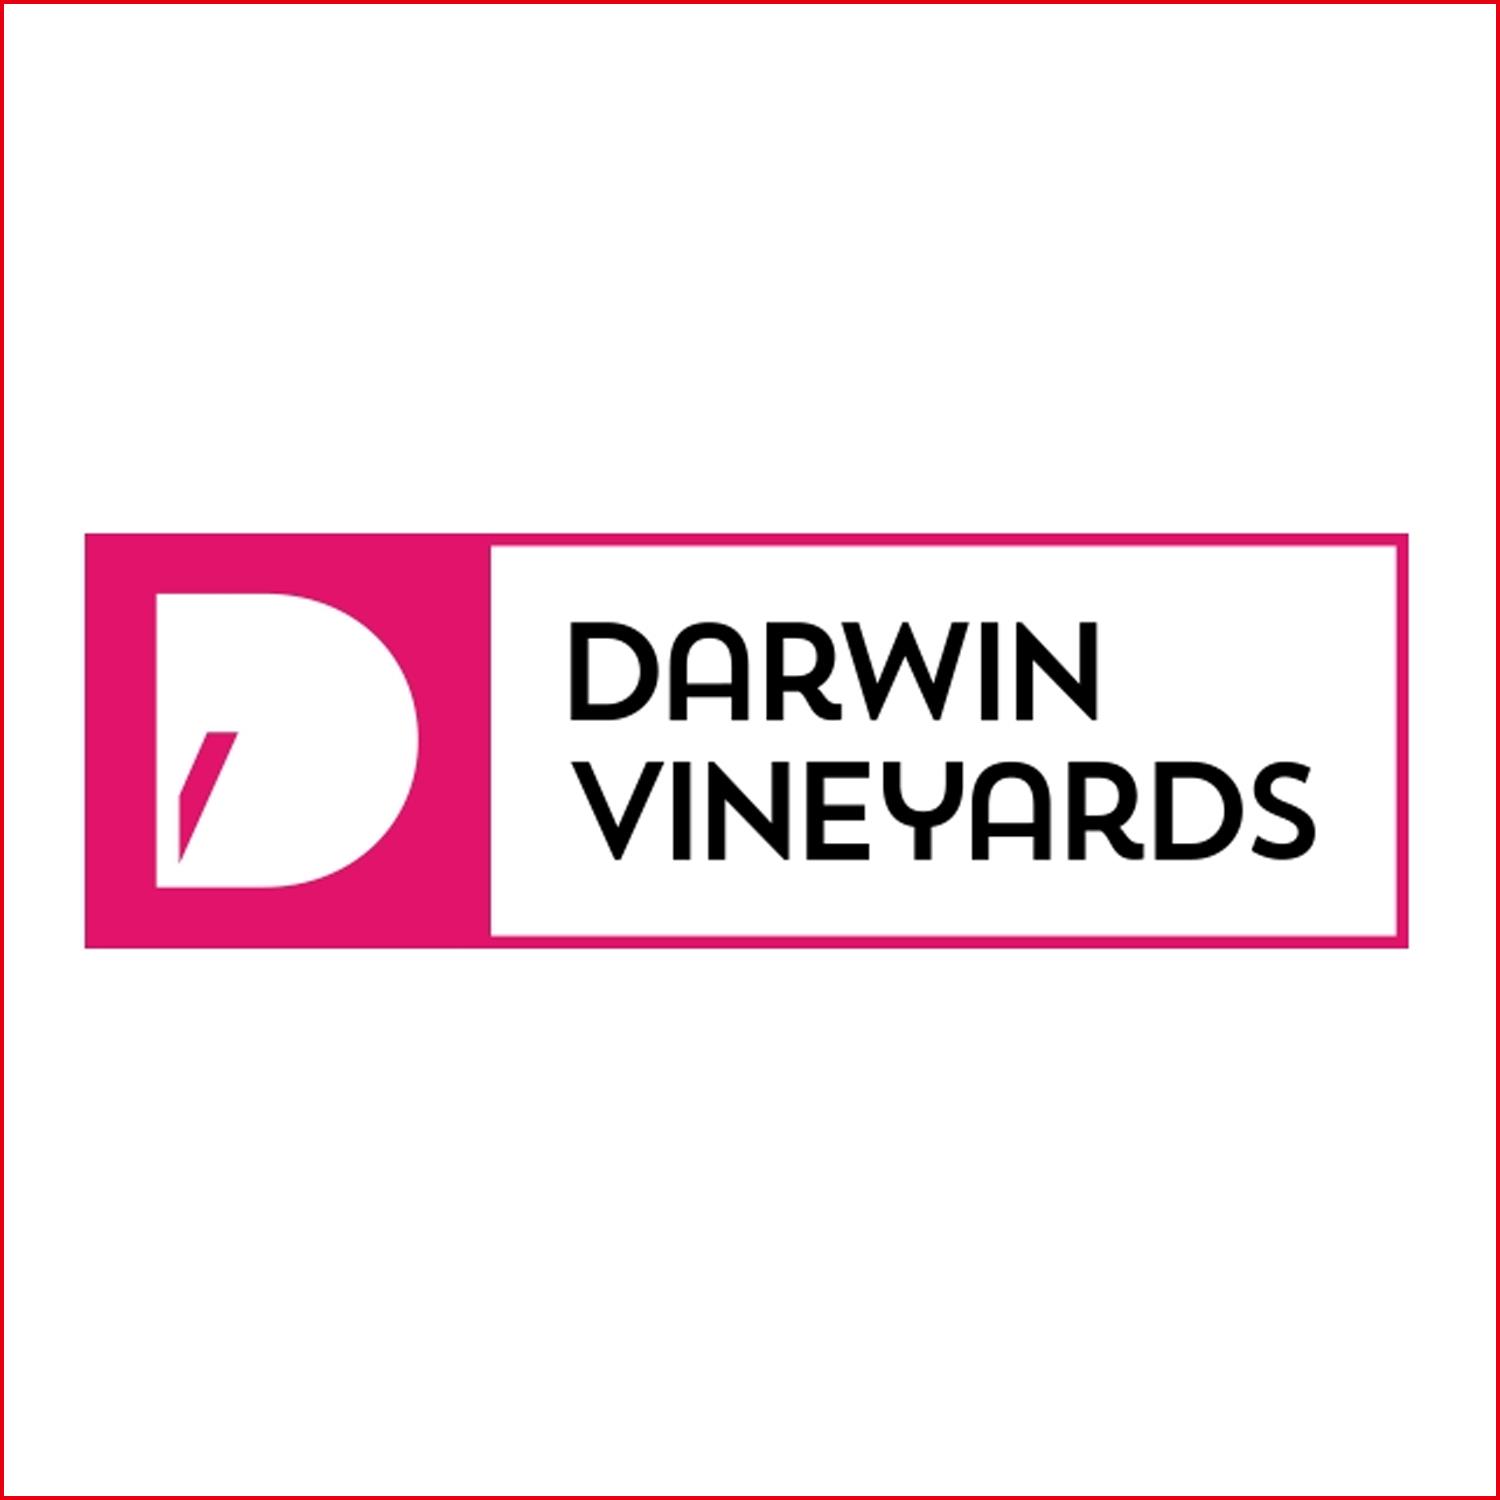  達爾文酒莊 Darwin Vineyards